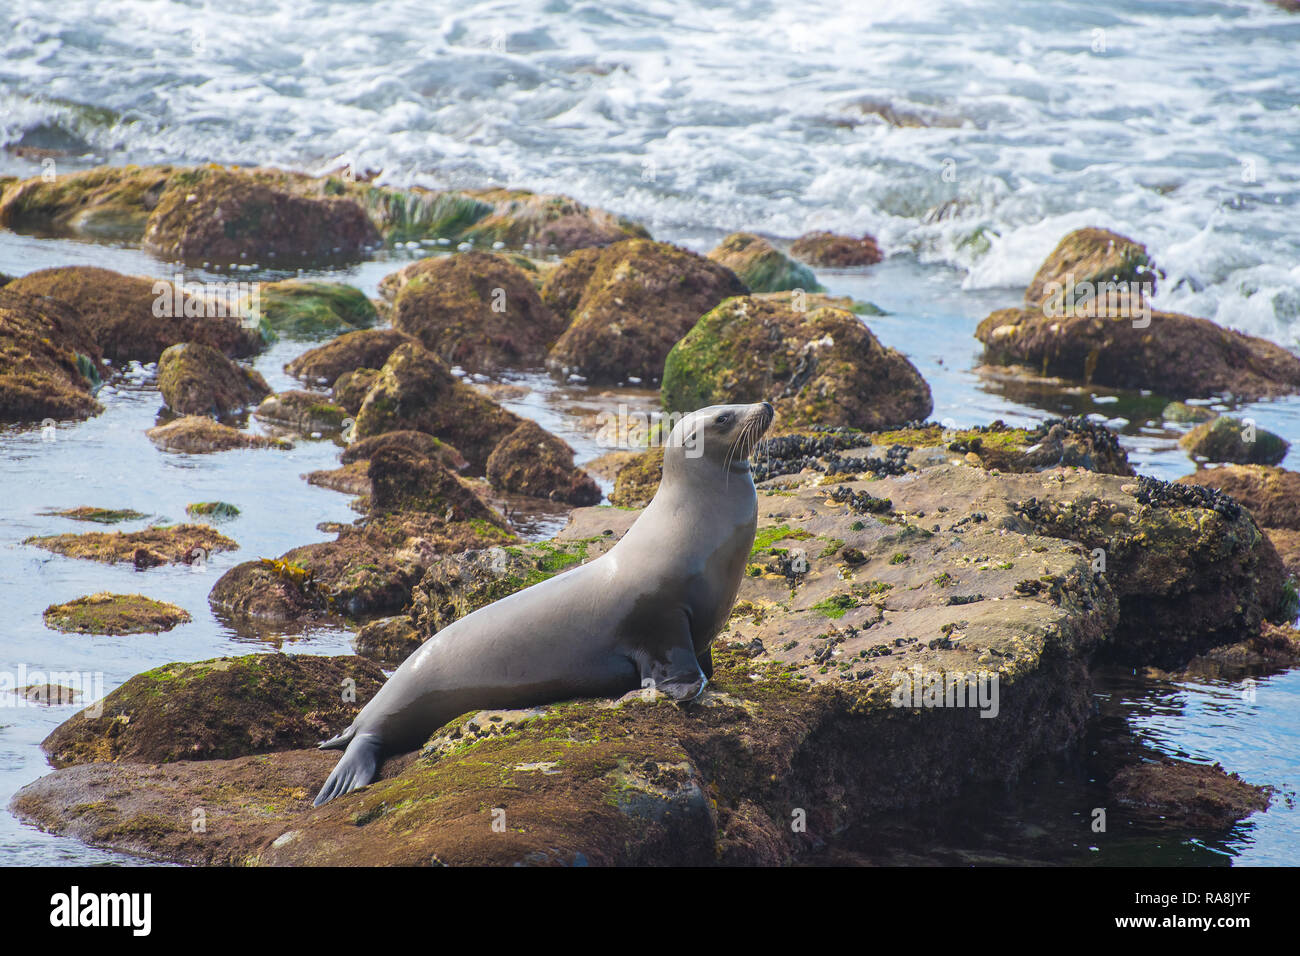 California Sea Lion Sunning on Rocks near the Edge of tha Pacific Ocean Stock Photo